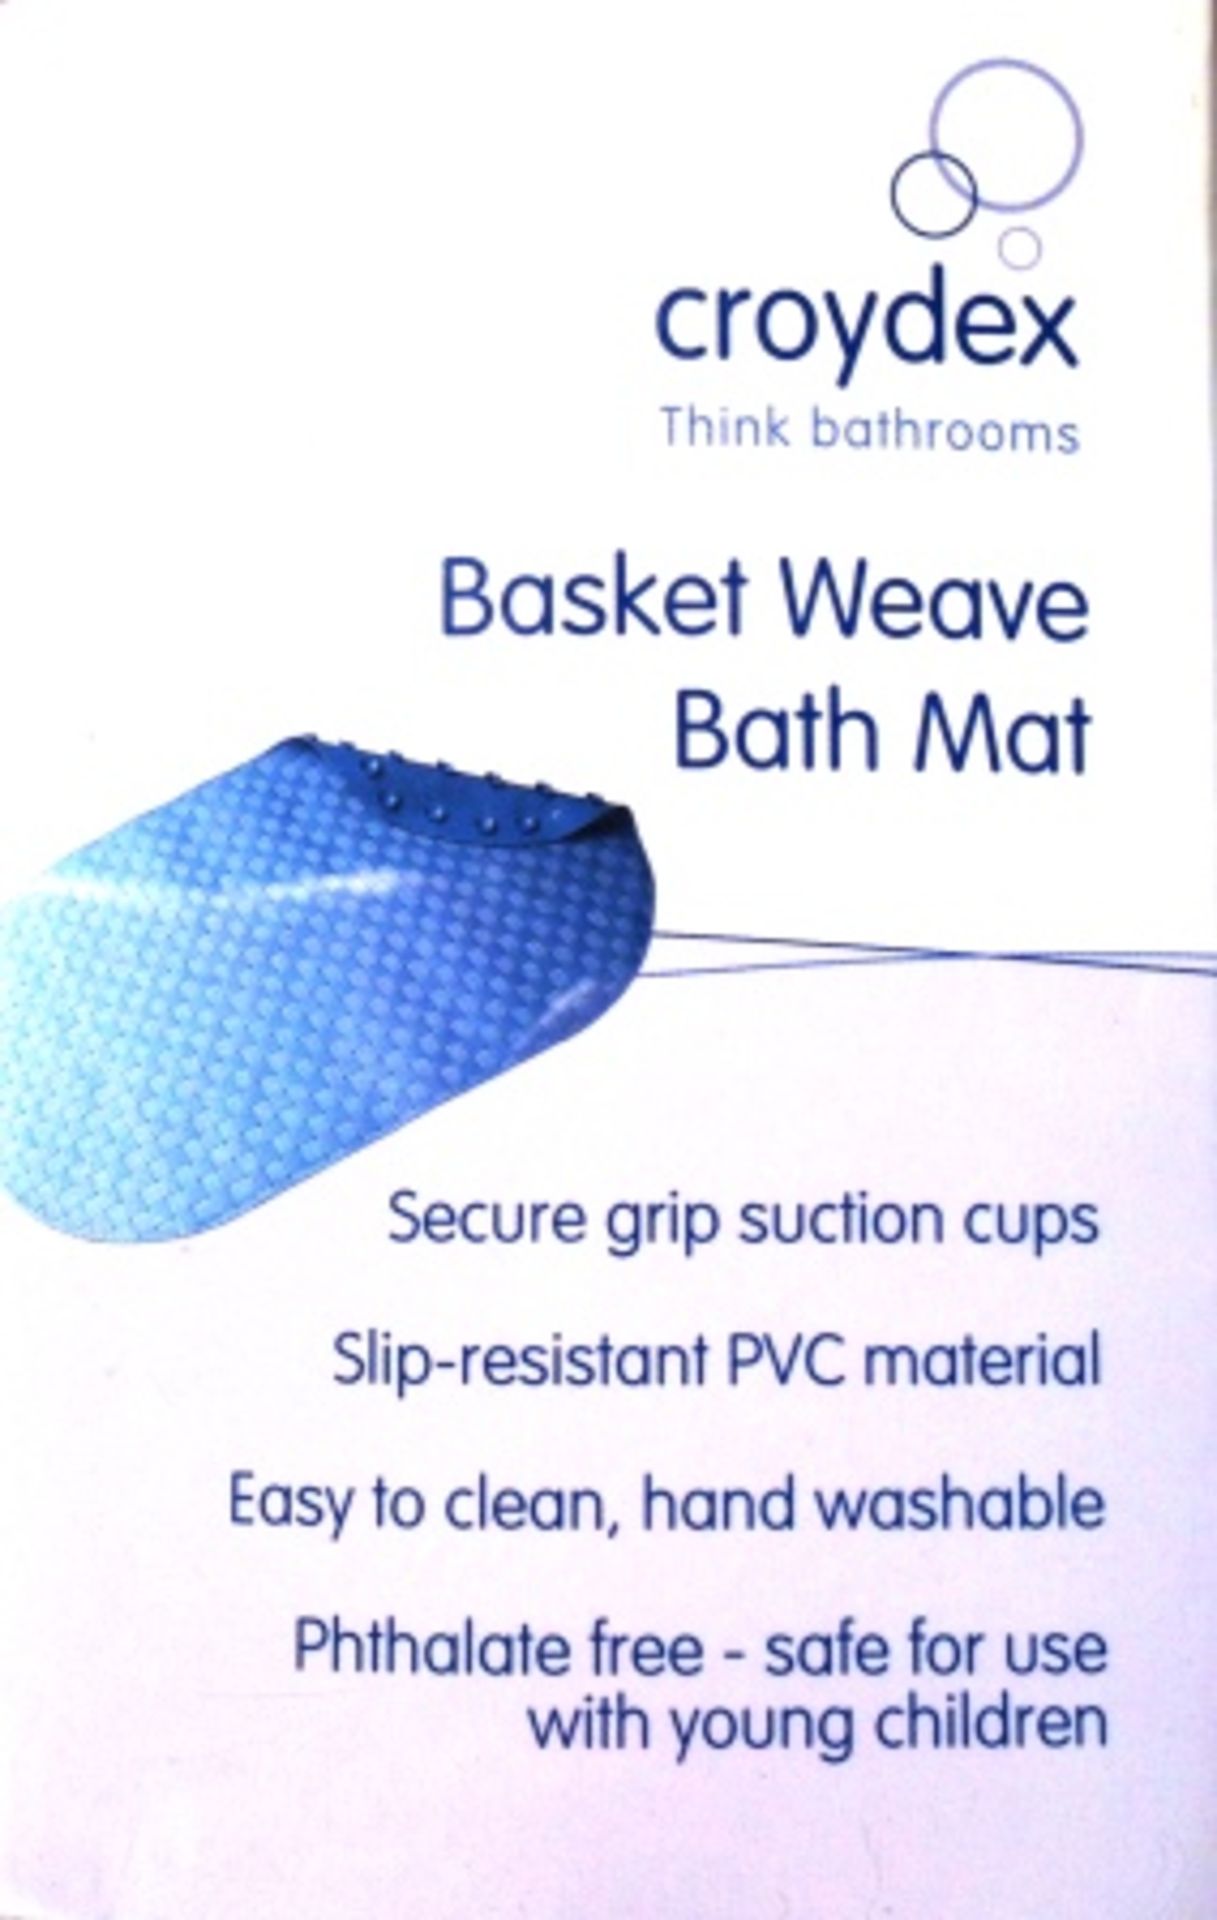 12 x Blue Croydex PVC basket weave bath mats 39 x 69cm with suction cups - Image 2 of 2